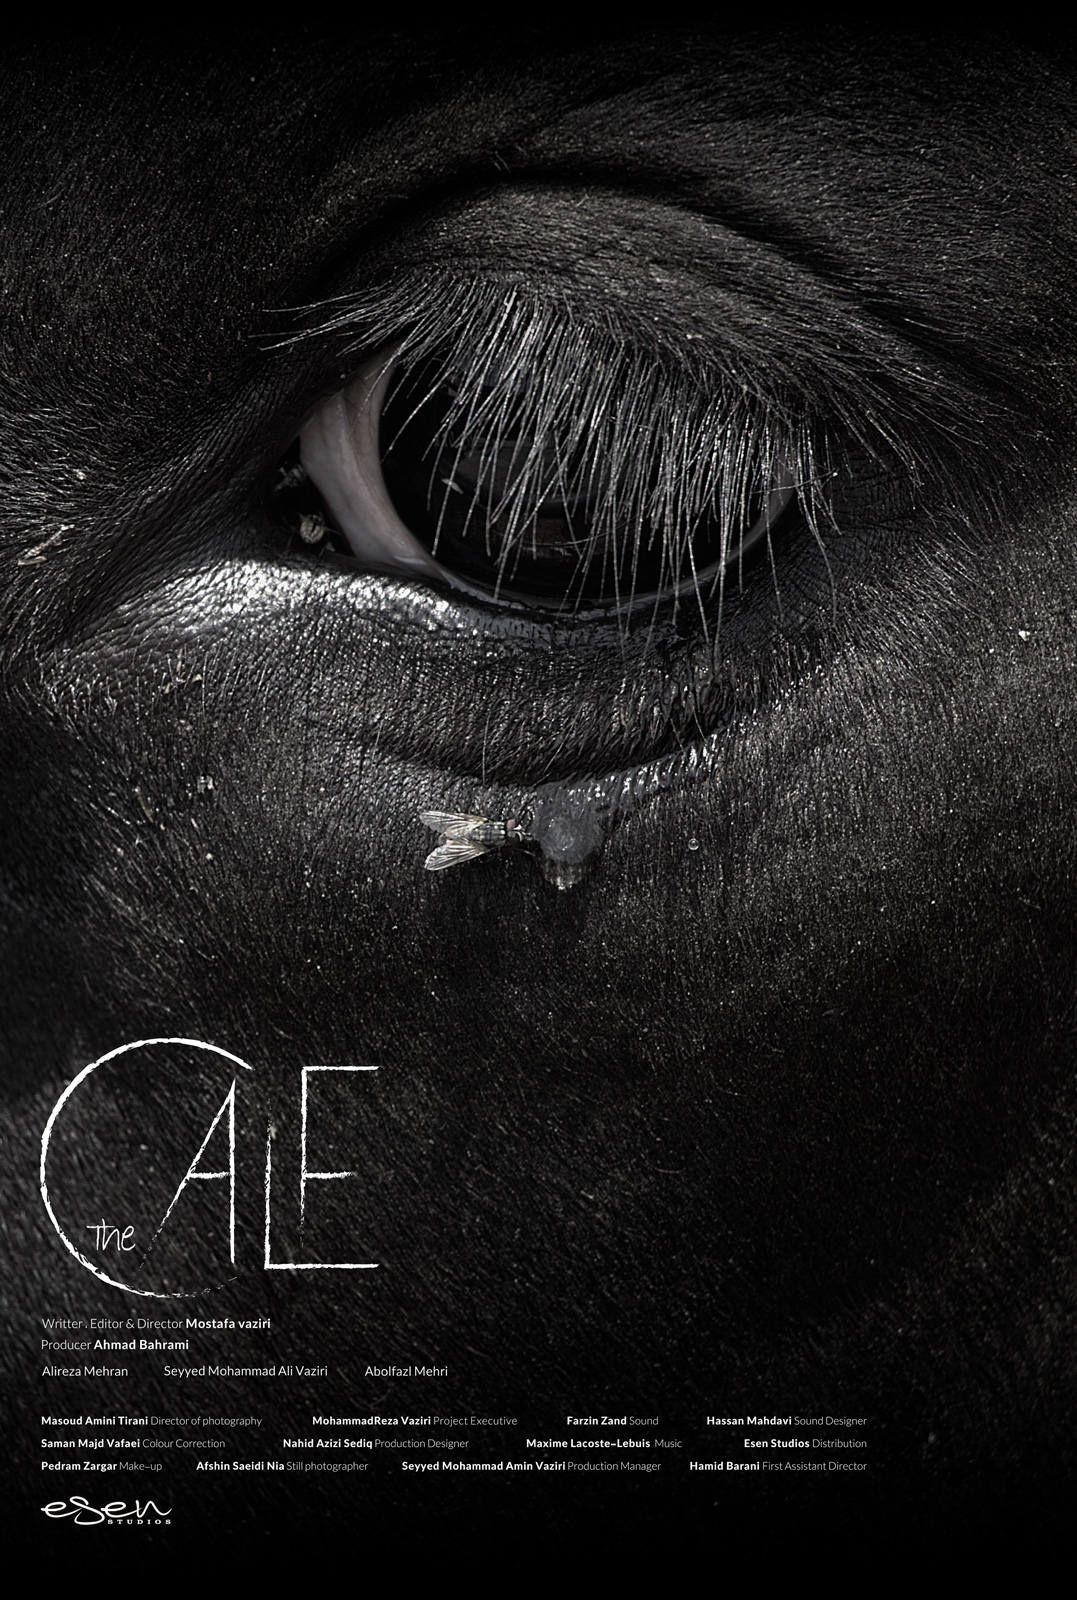 Poster of "The Calf", short film by Mostafa Vaziri.